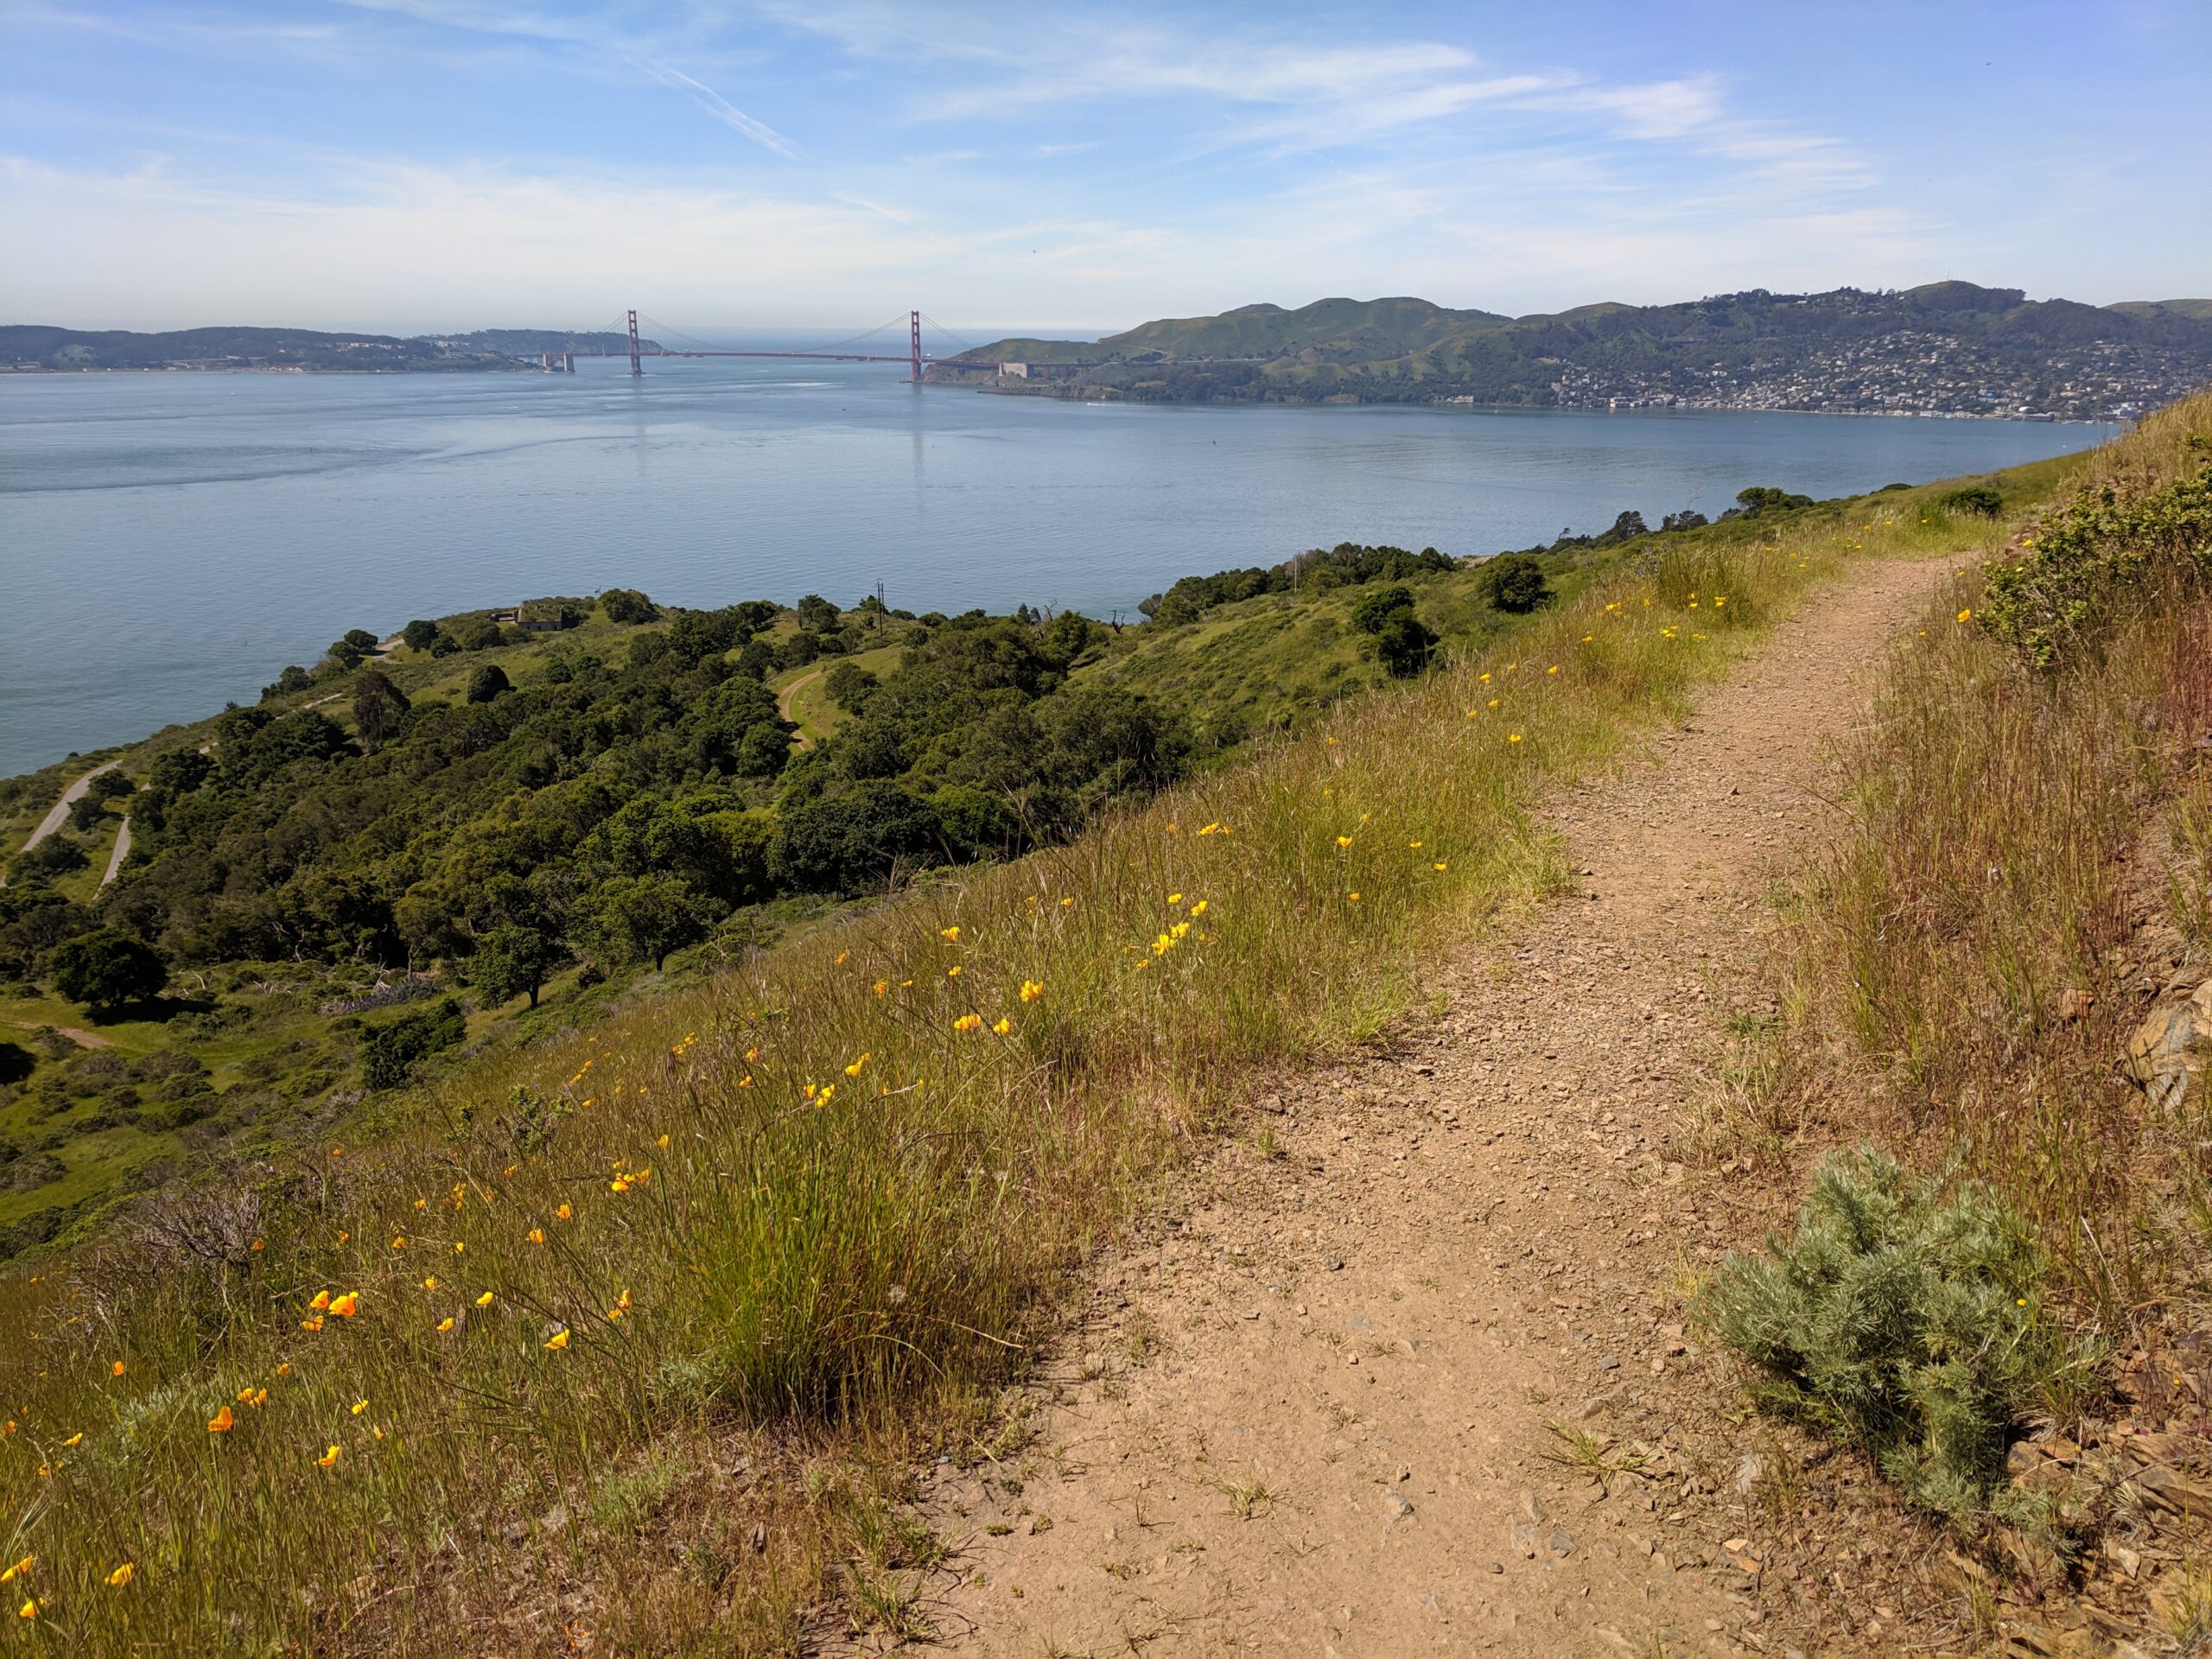 Stanly Lane and San Francisco Bay Trail, California - 56 Reviews